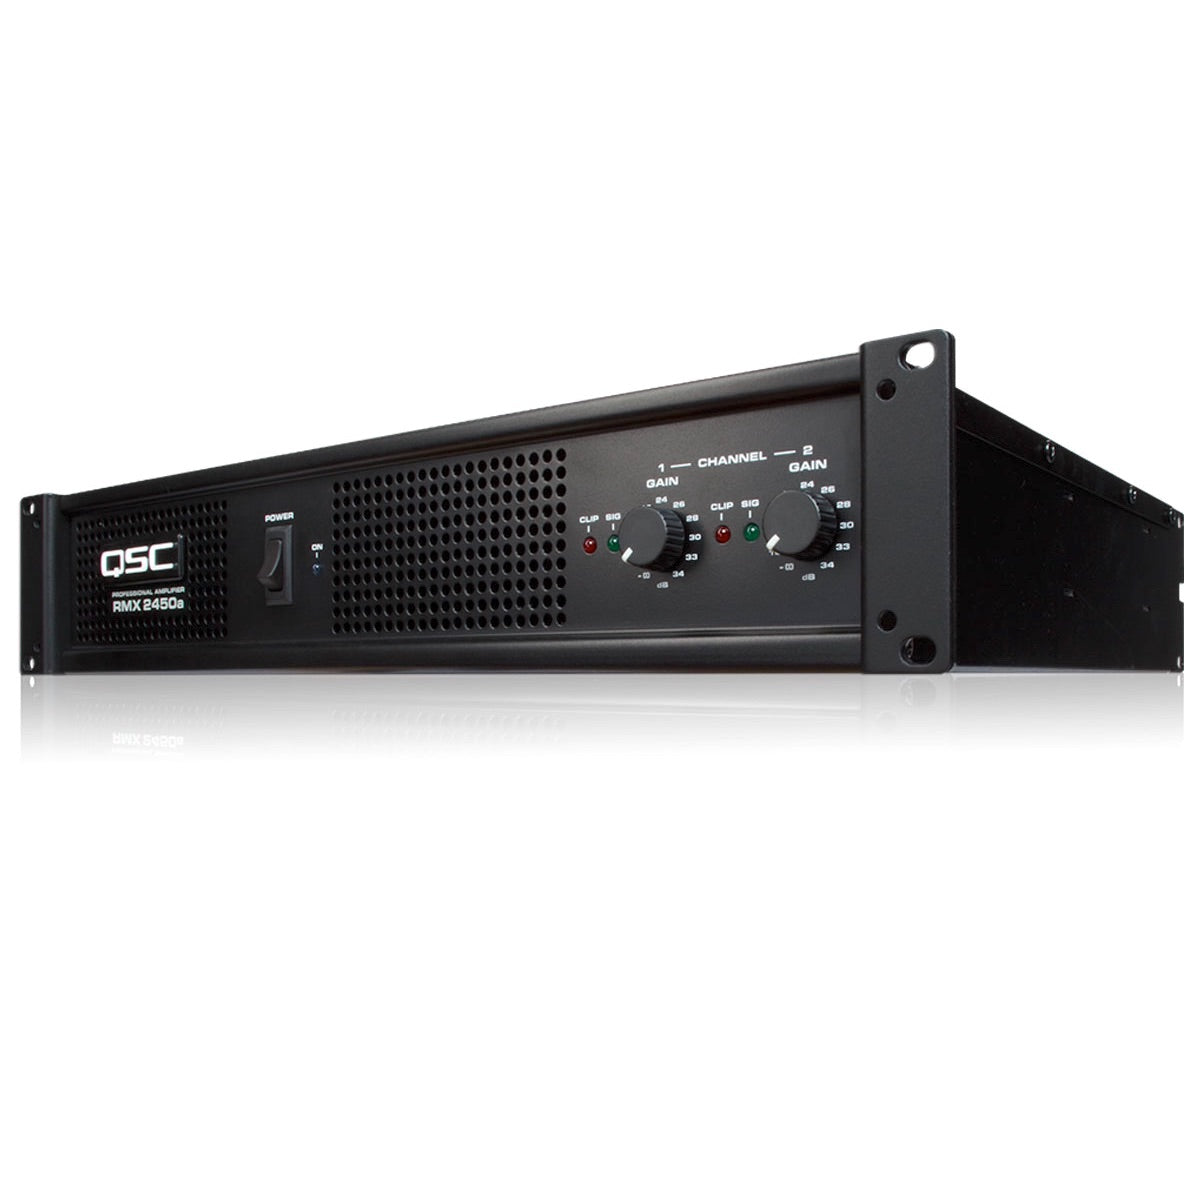 QSC RMX 2450a Two-Channel Power Amplifier, left